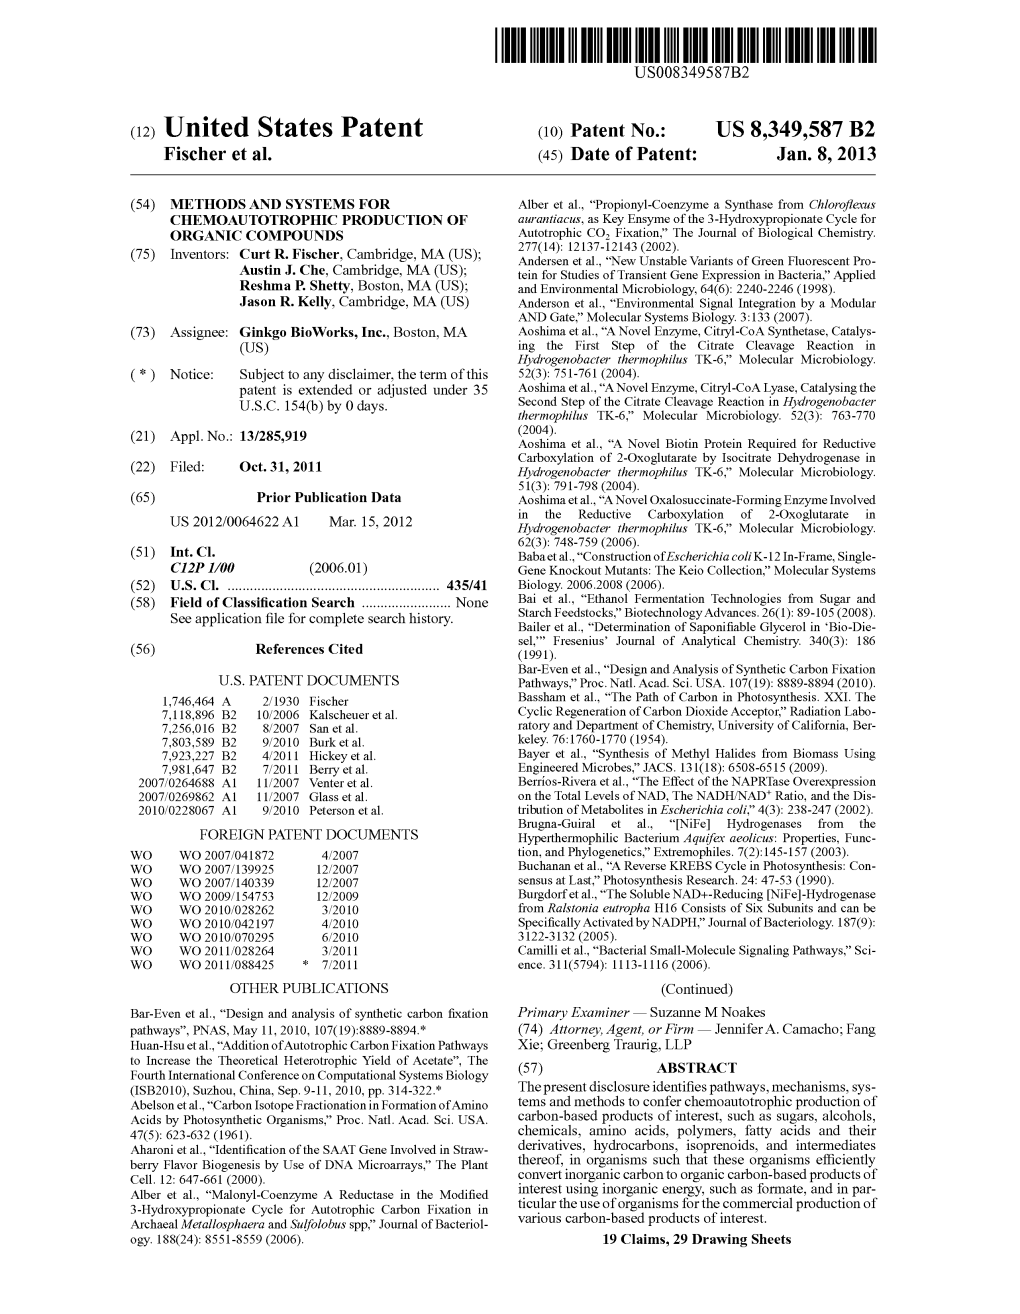 (12) United States Patent (10) Patent No.: US 8,349,587 B2 Fischer Et Al